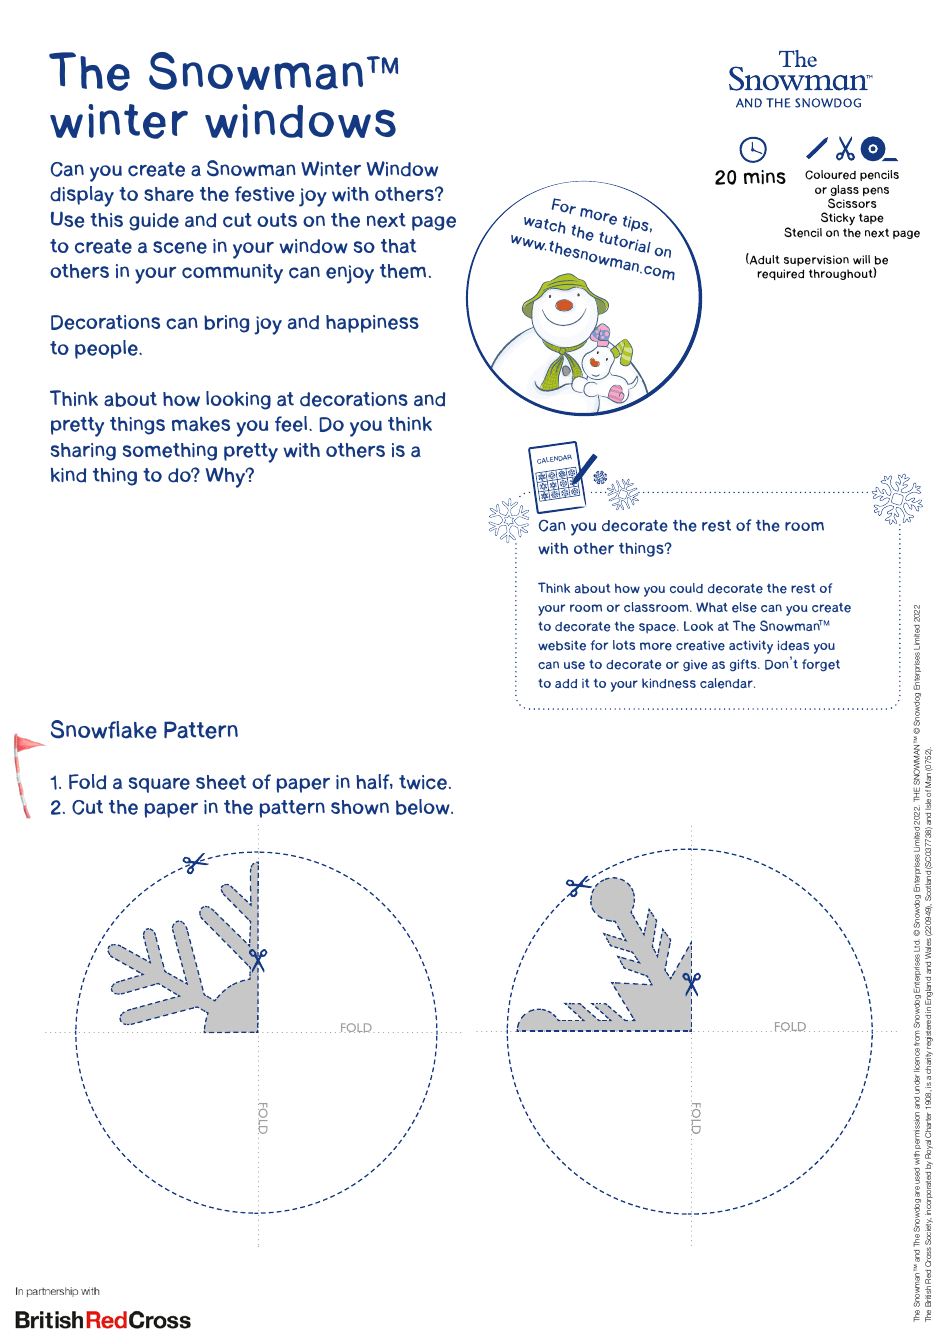 The Snowman Winter Window Templates by Snowdog Enterprises Limited